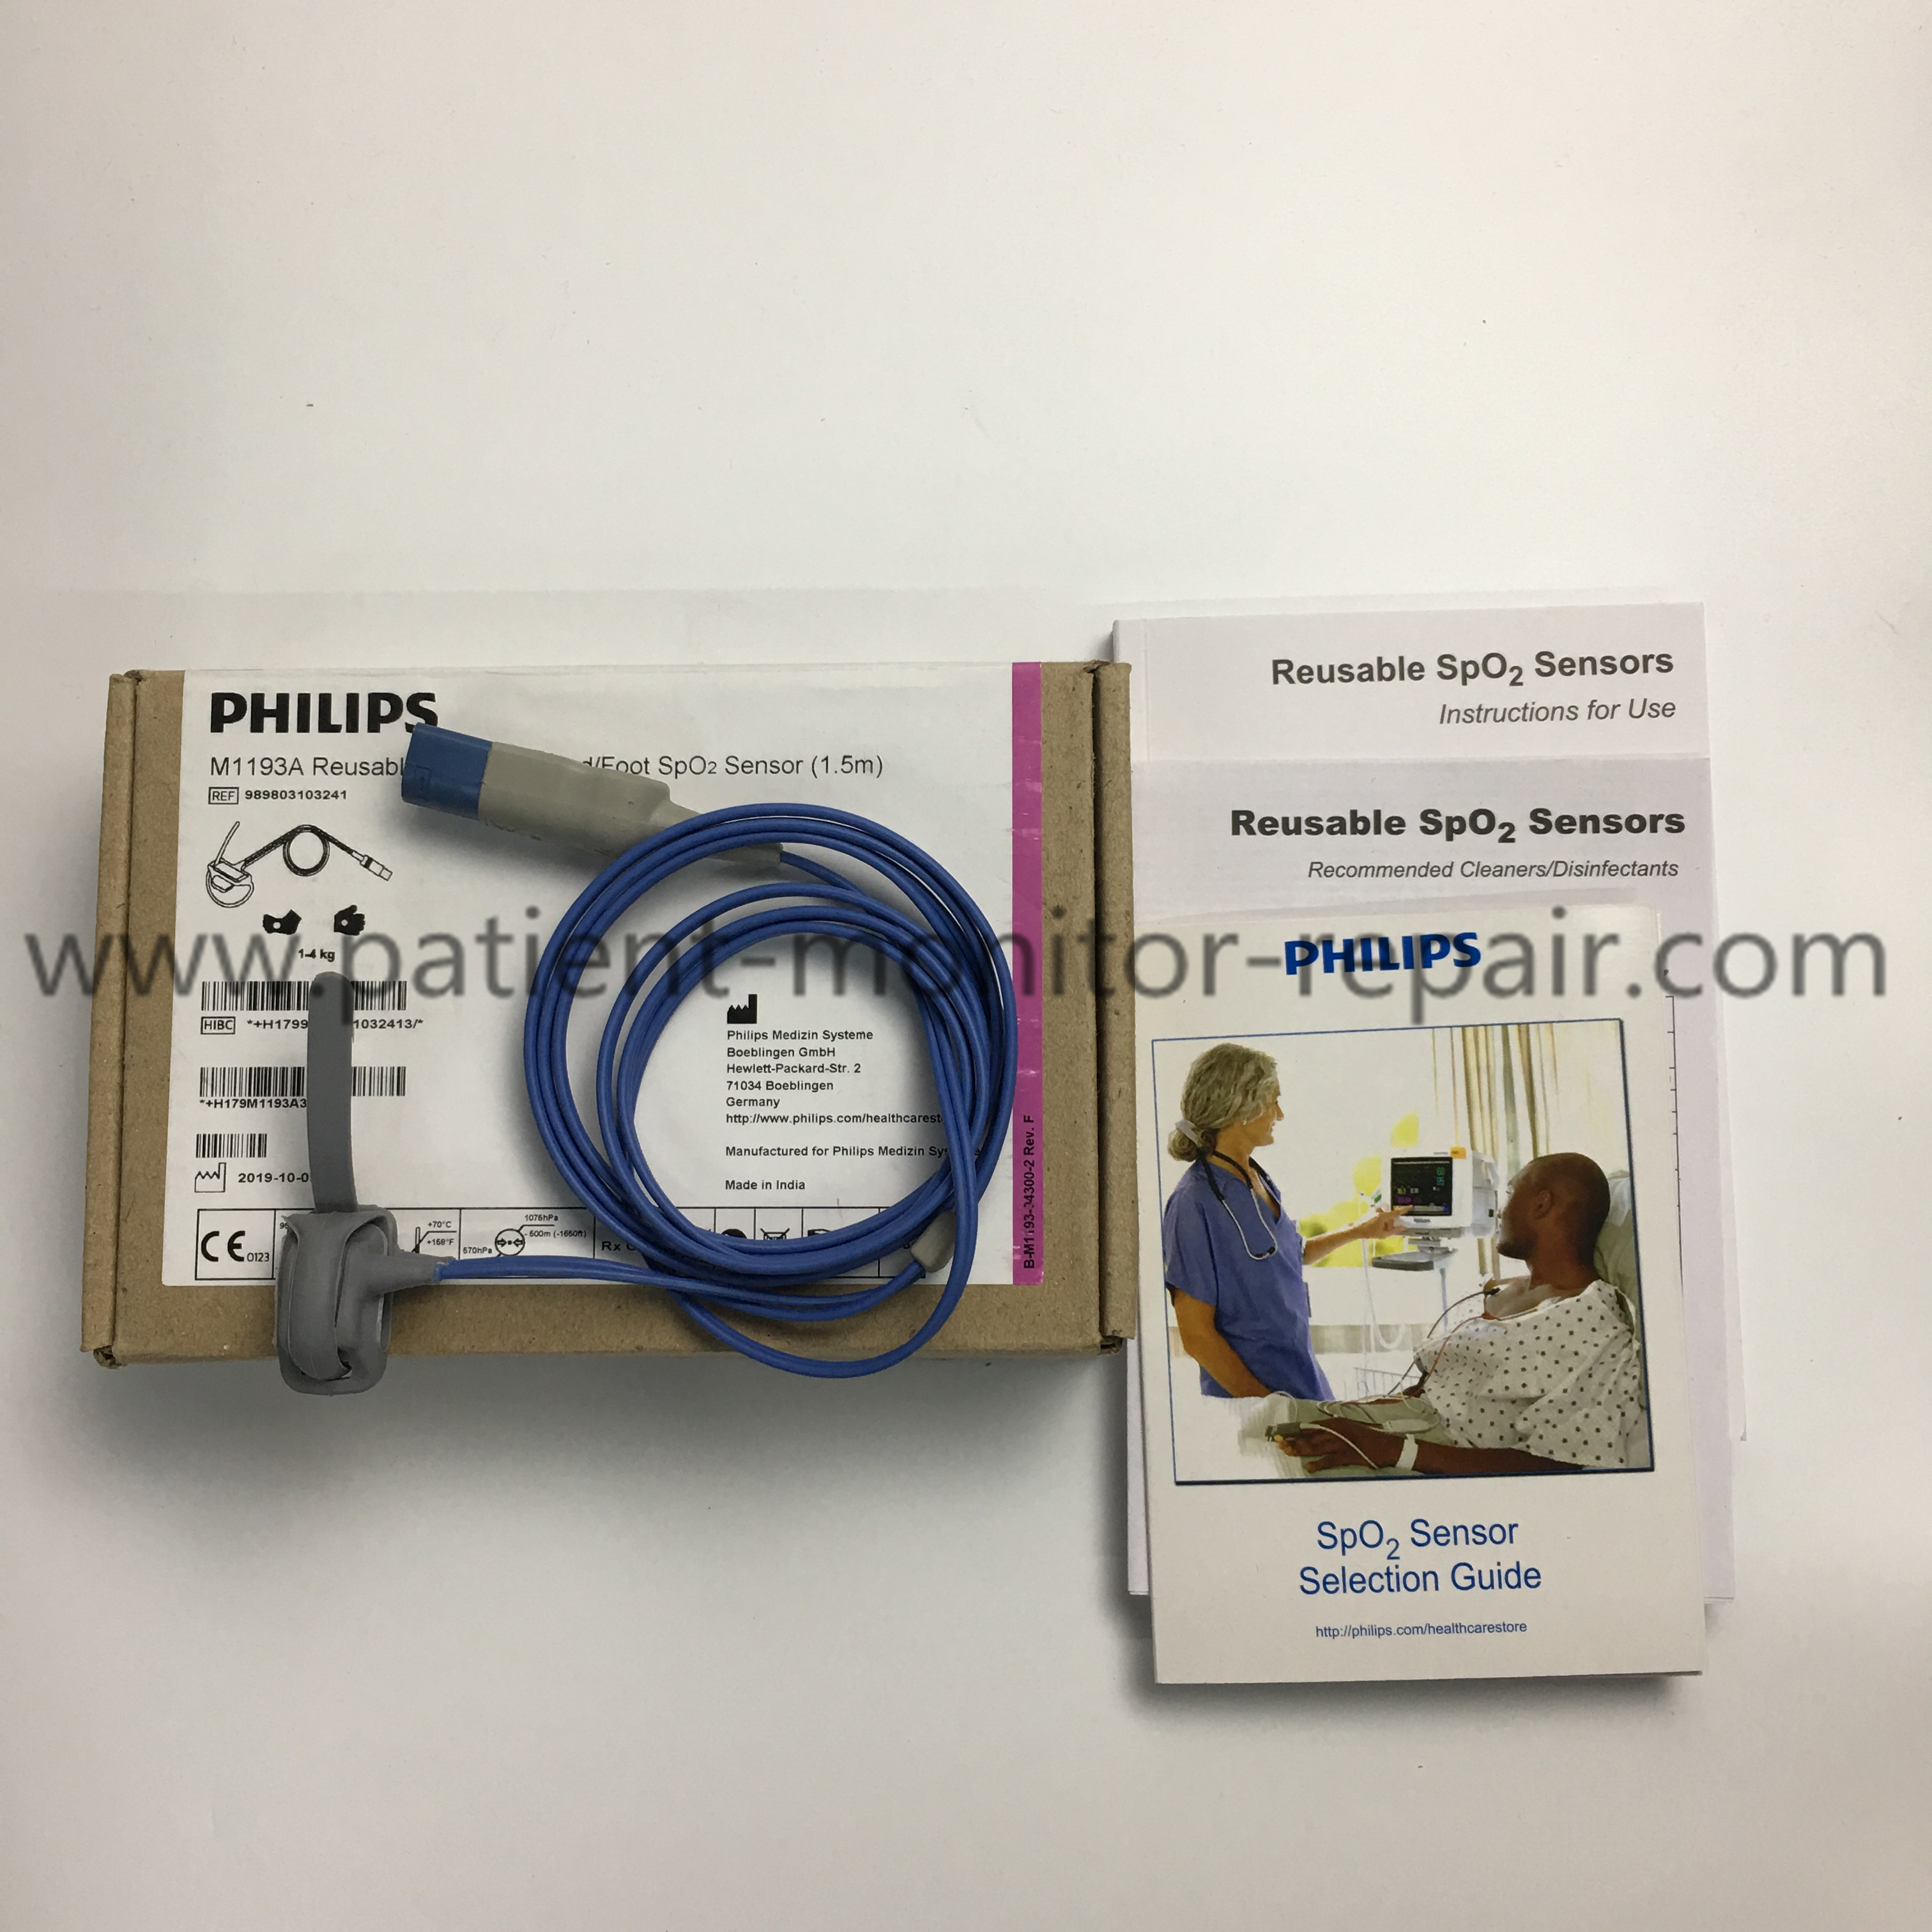 Philips Reusable Neonatal Hand Foot SpO2 Sensor 1.5m M1193A Ref 989803103241 - 1.jpg